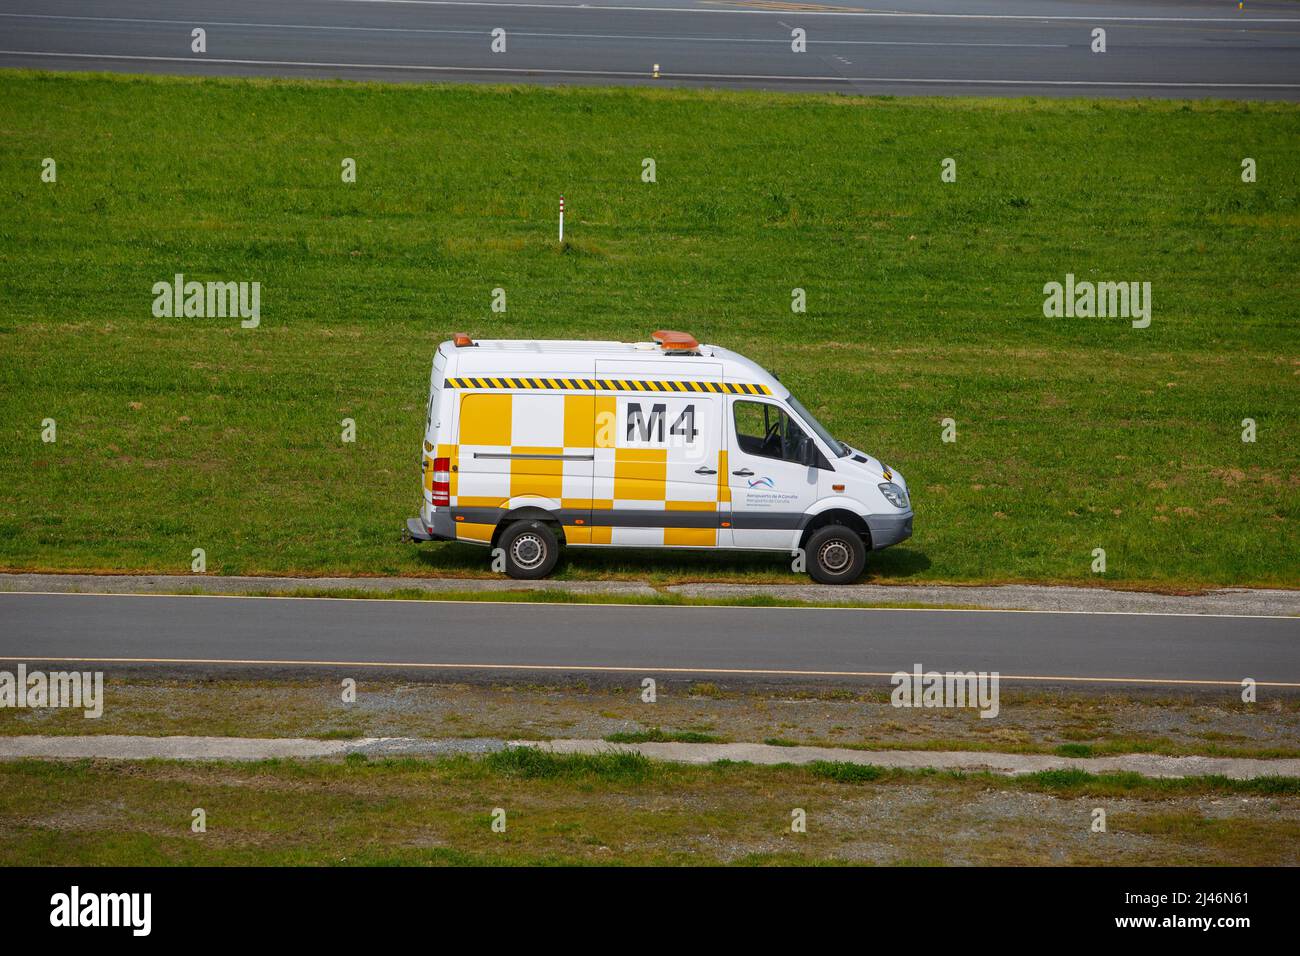 Runway control van hi-res stock photography and images - Alamy